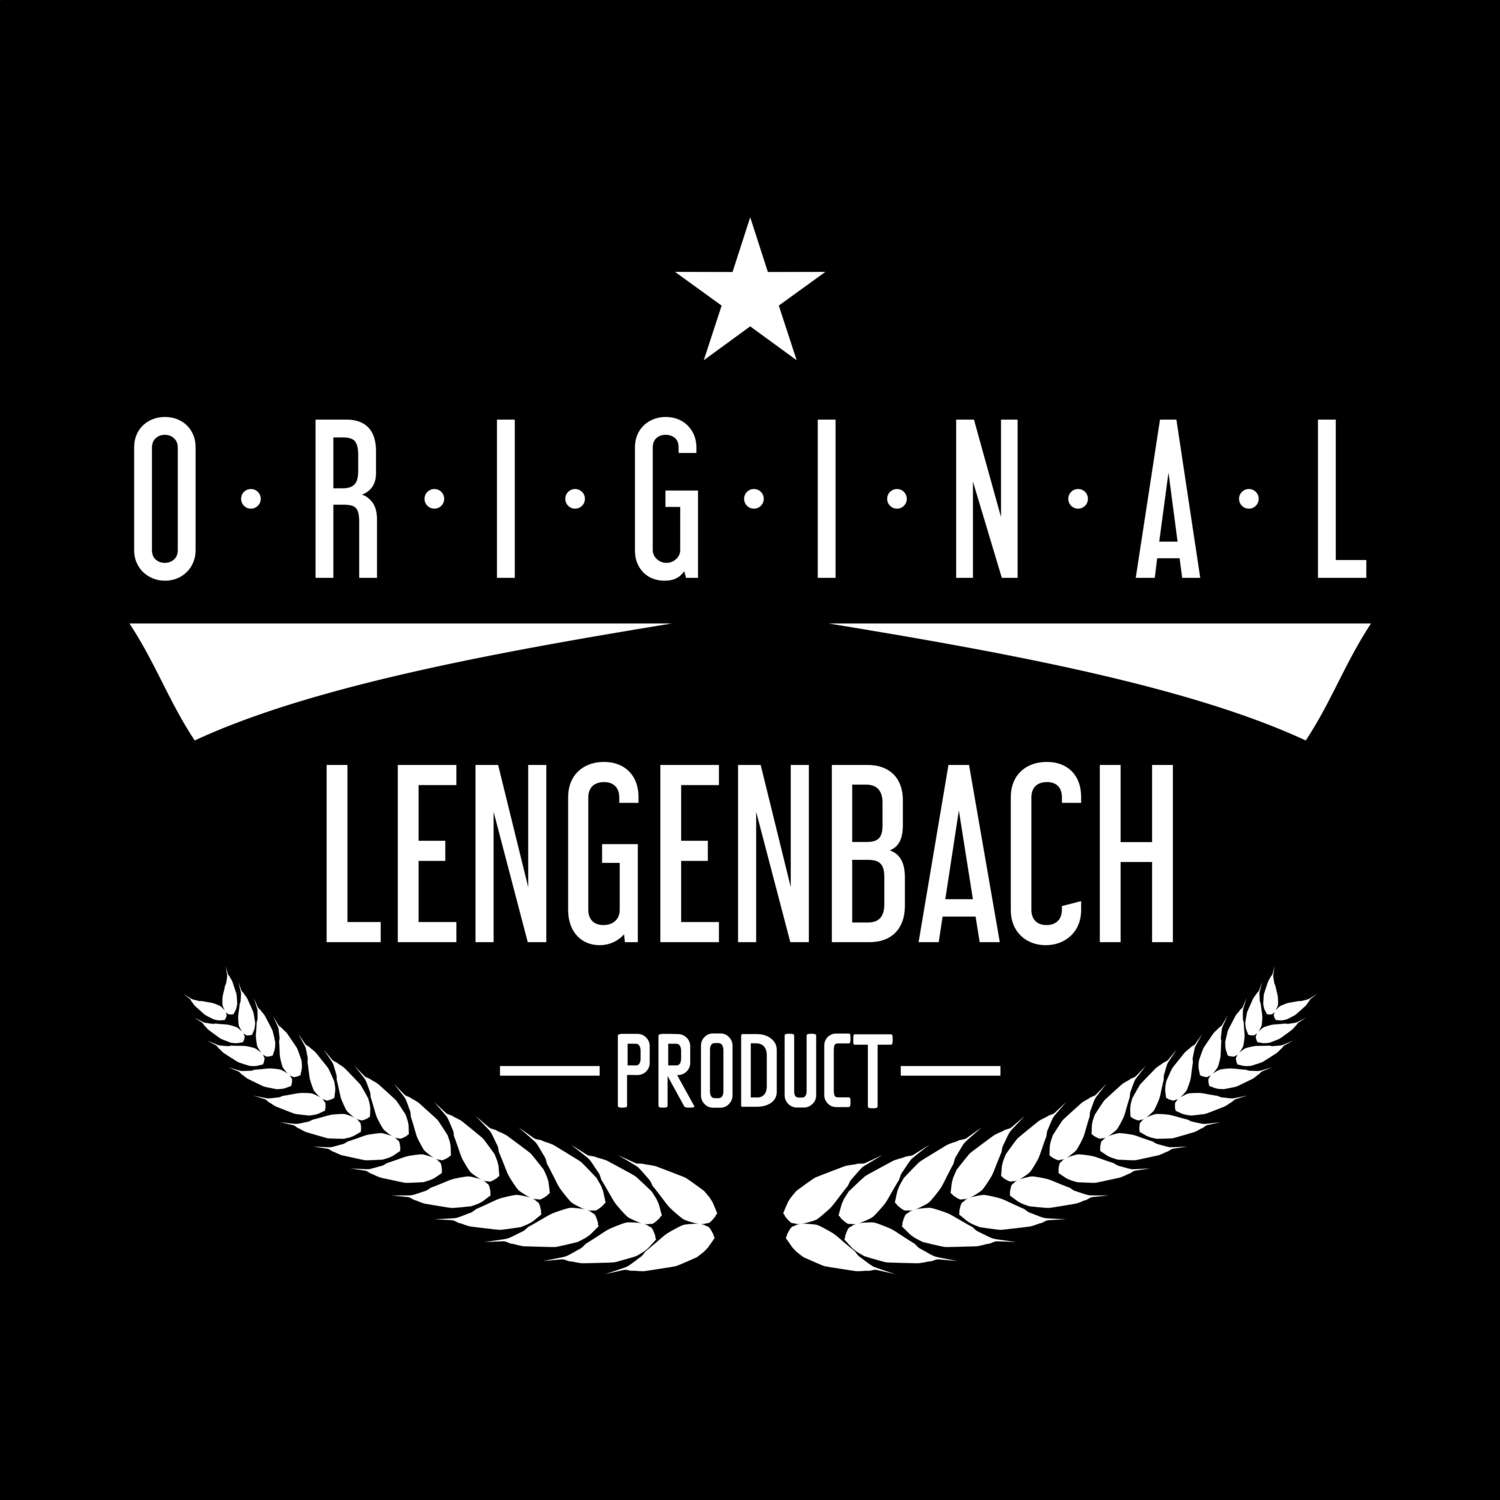 Lengenbach T-Shirt »Original Product«